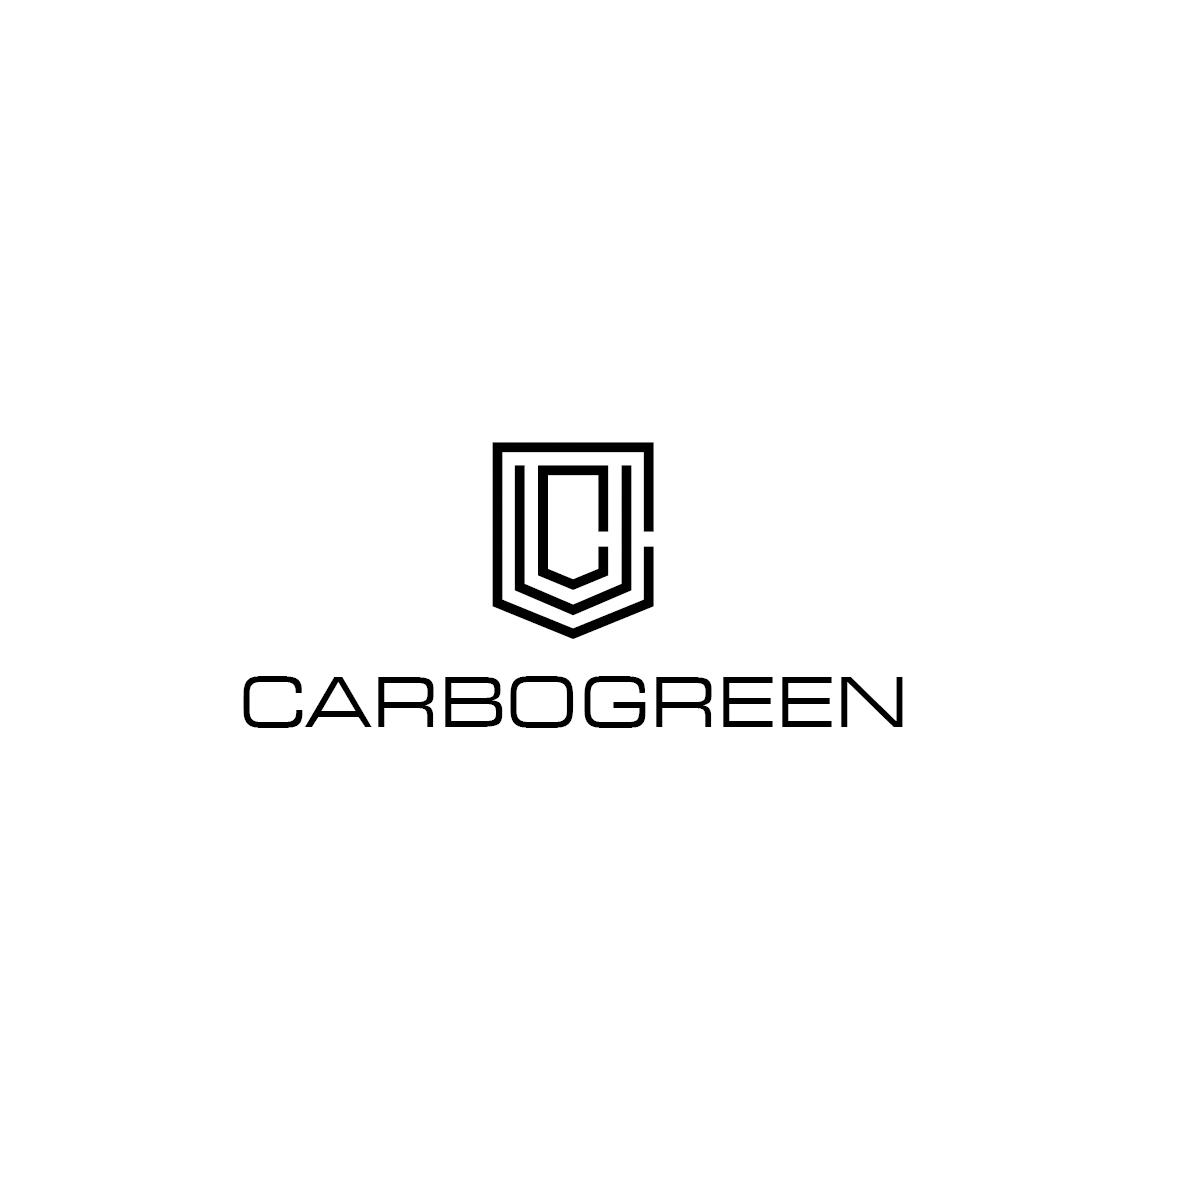 18类-箱包皮具CARBOGREEN商标转让